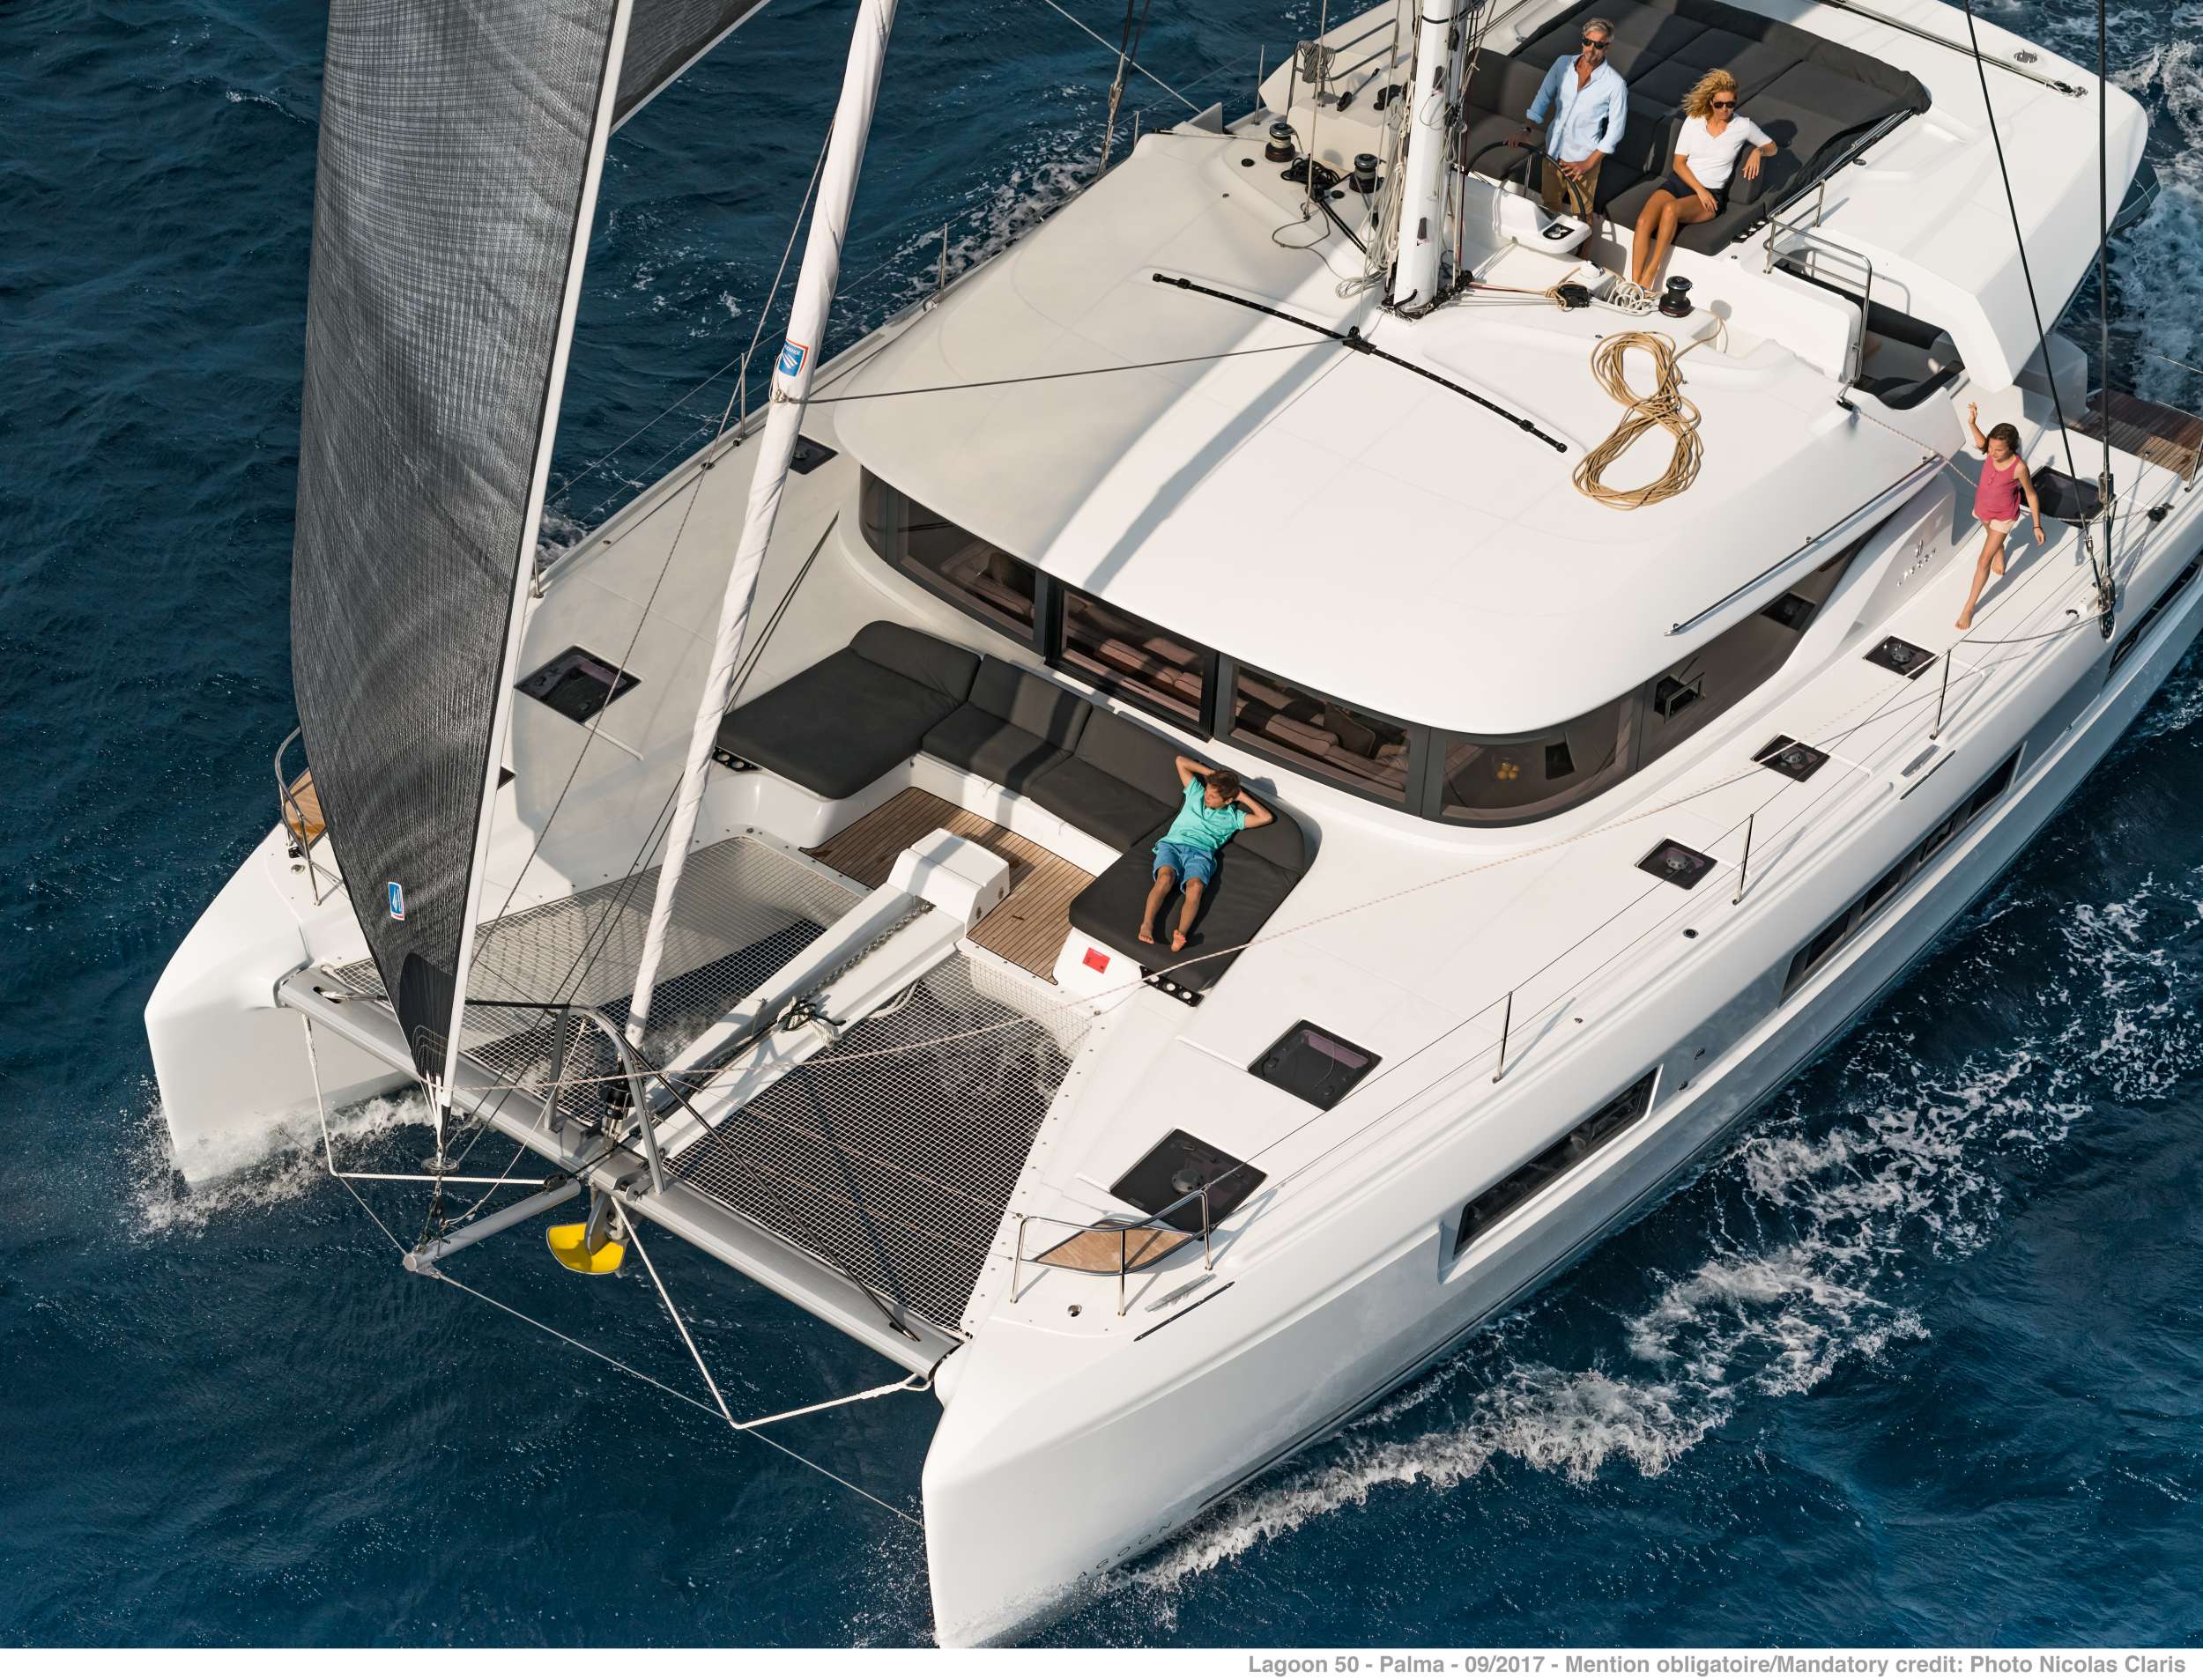 ONEIDA 2 - Yacht Charter Palaio Faliro & Boat hire in Greece 6